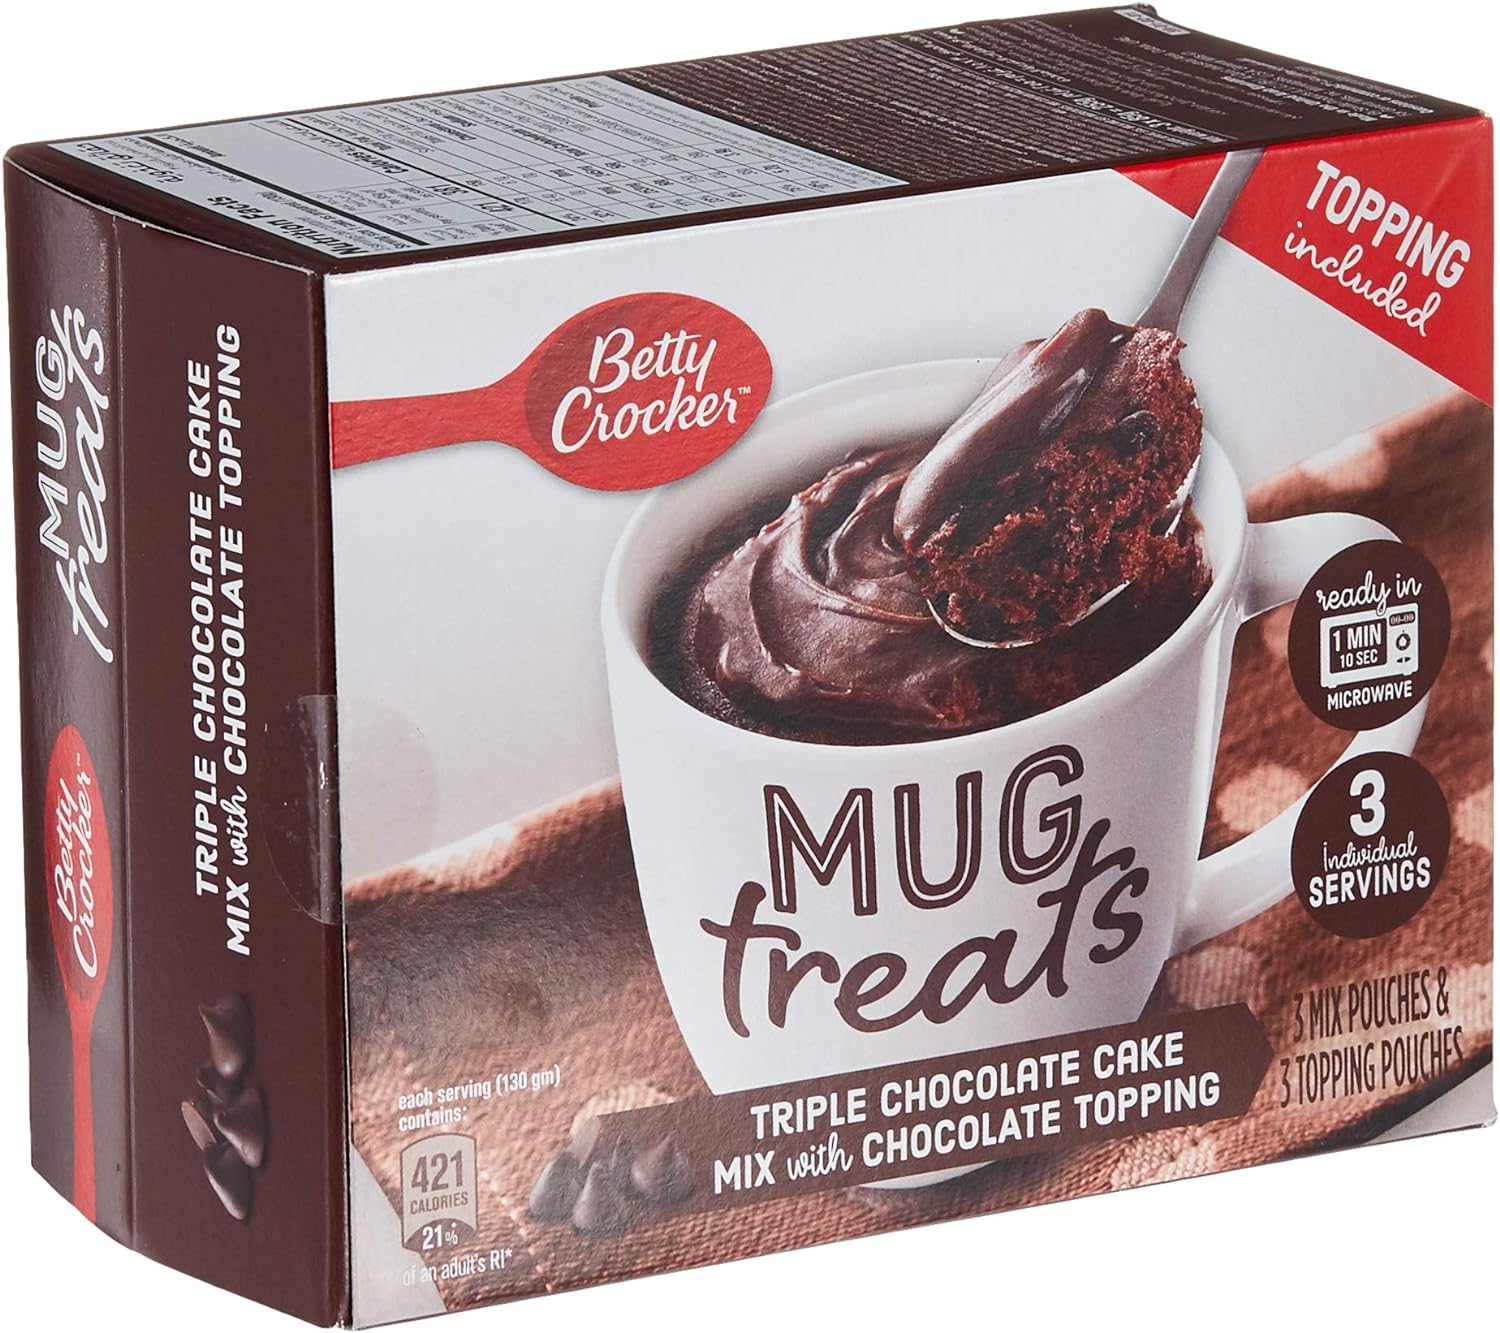 Betty Crocker Mug Treats Triple Chocolate Cake Mix With Chocolate Topping, 255 Gm